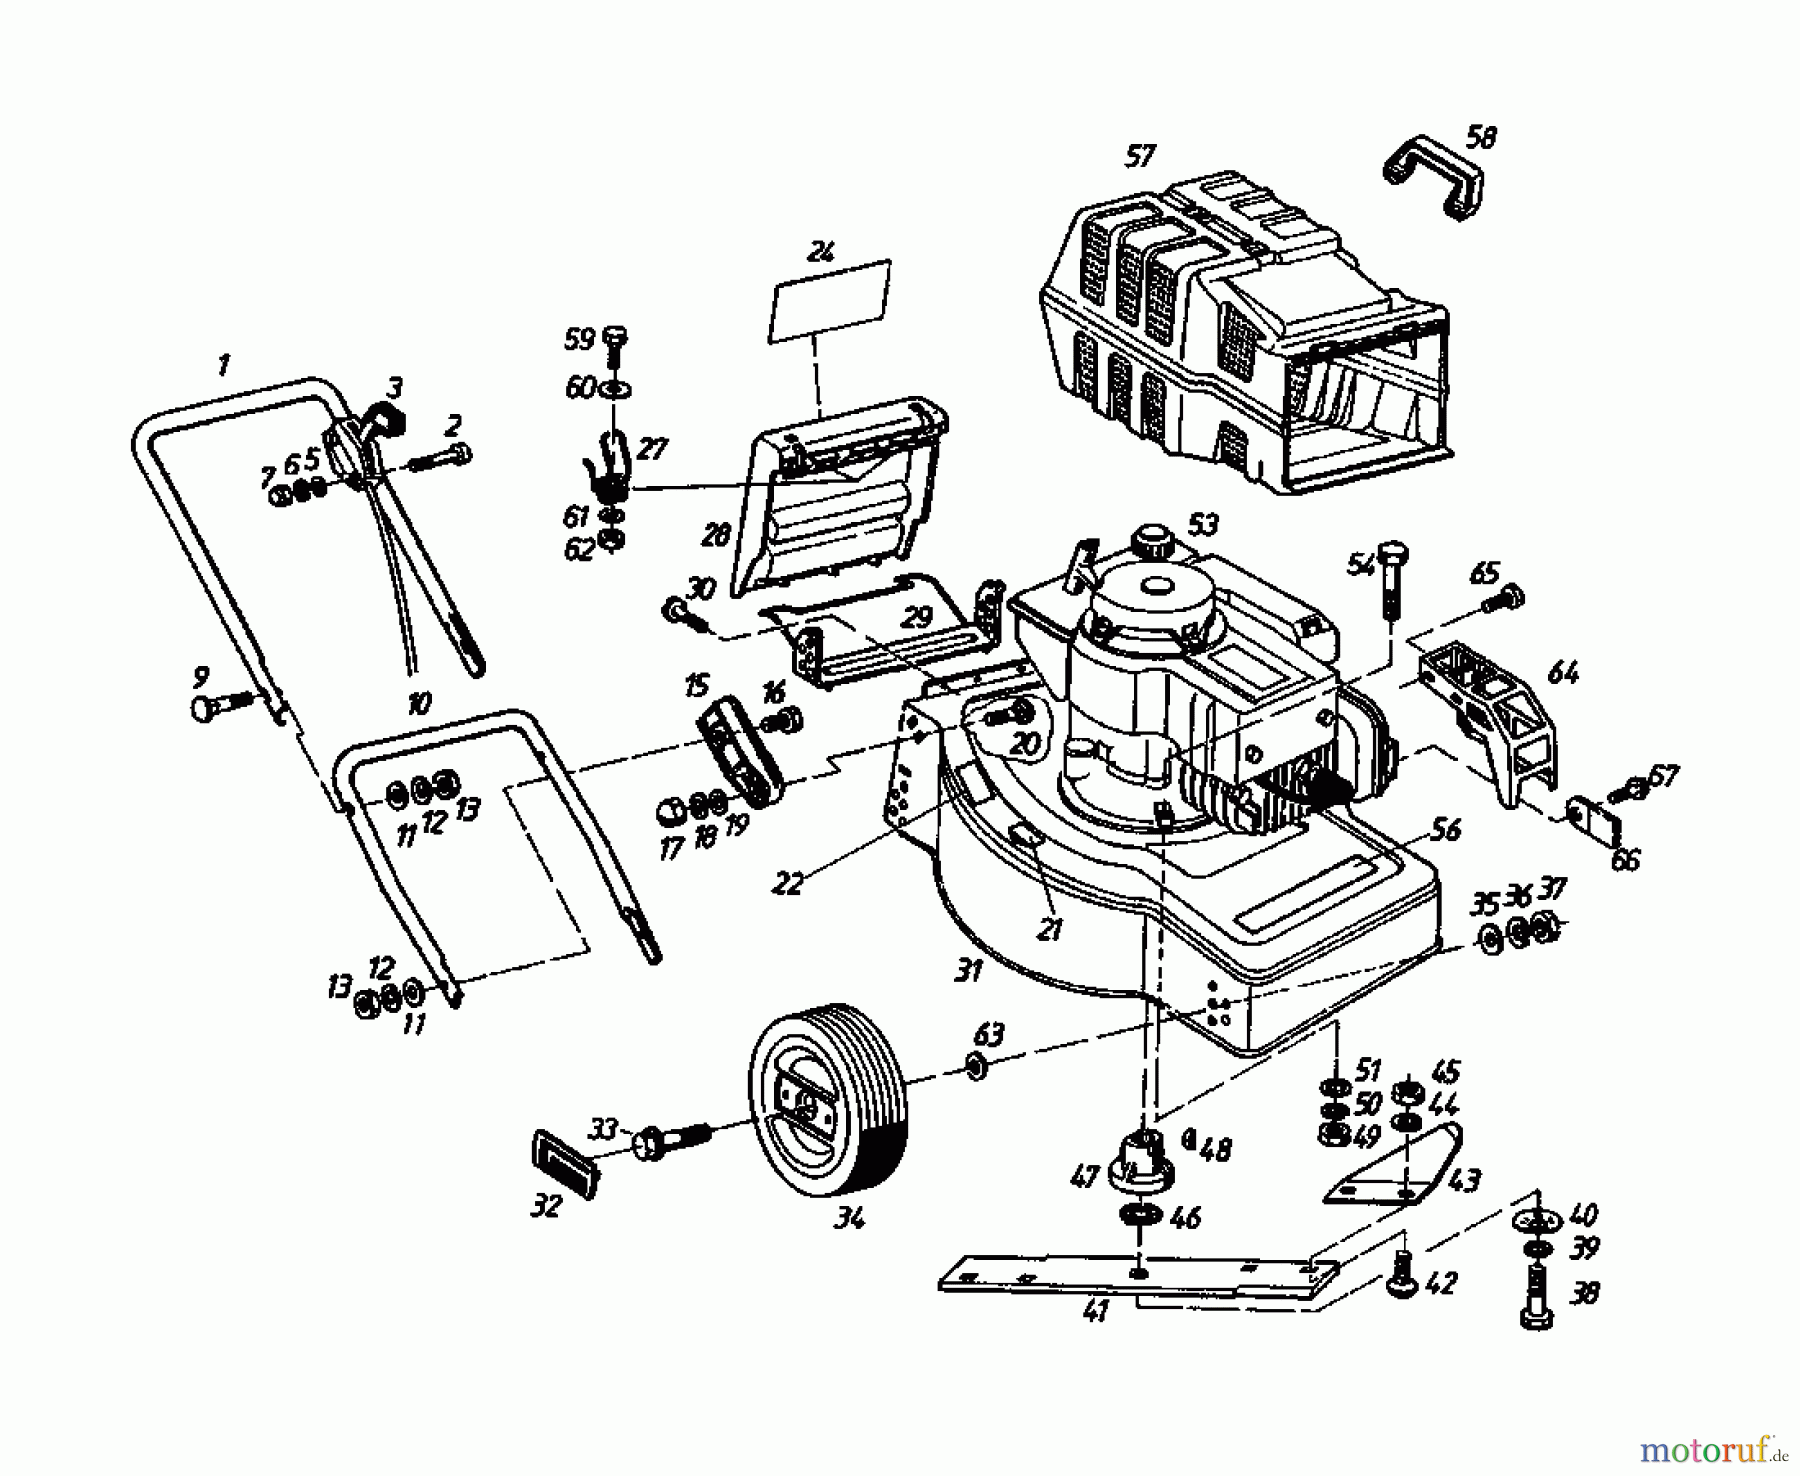  Gutbrod Petrol mower TURBO 46 HB 02893.01  (1987) Basic machine